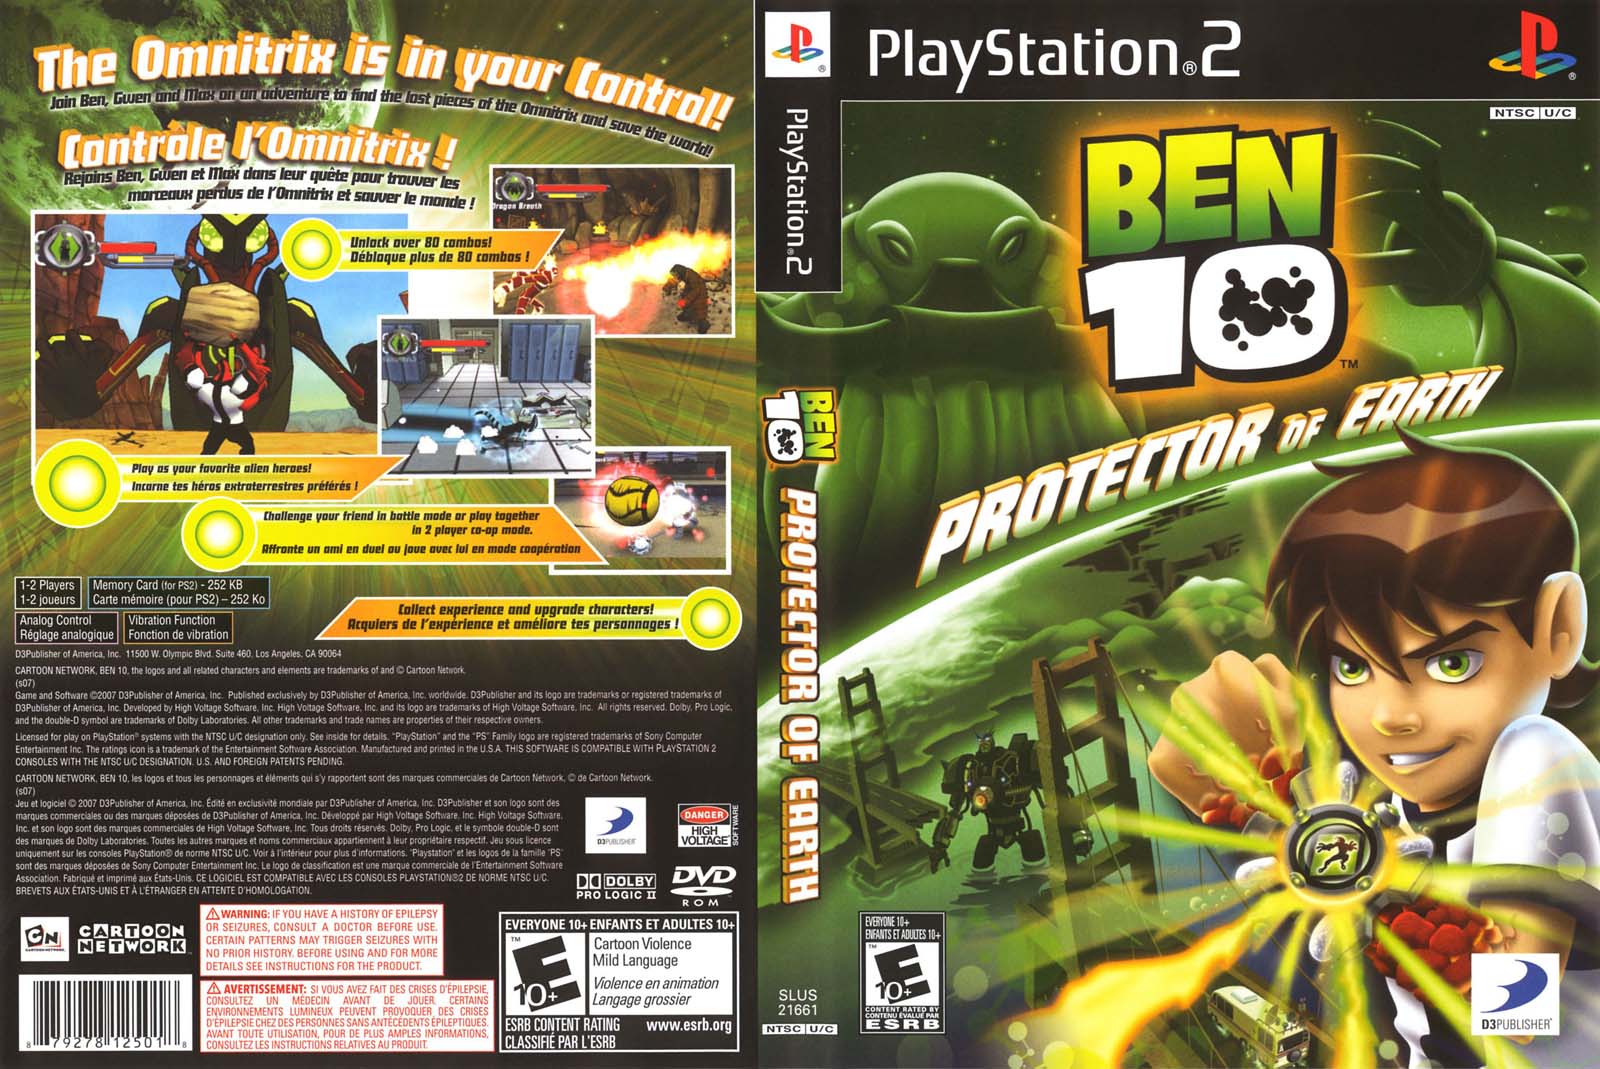 ben 10 protector of earth download